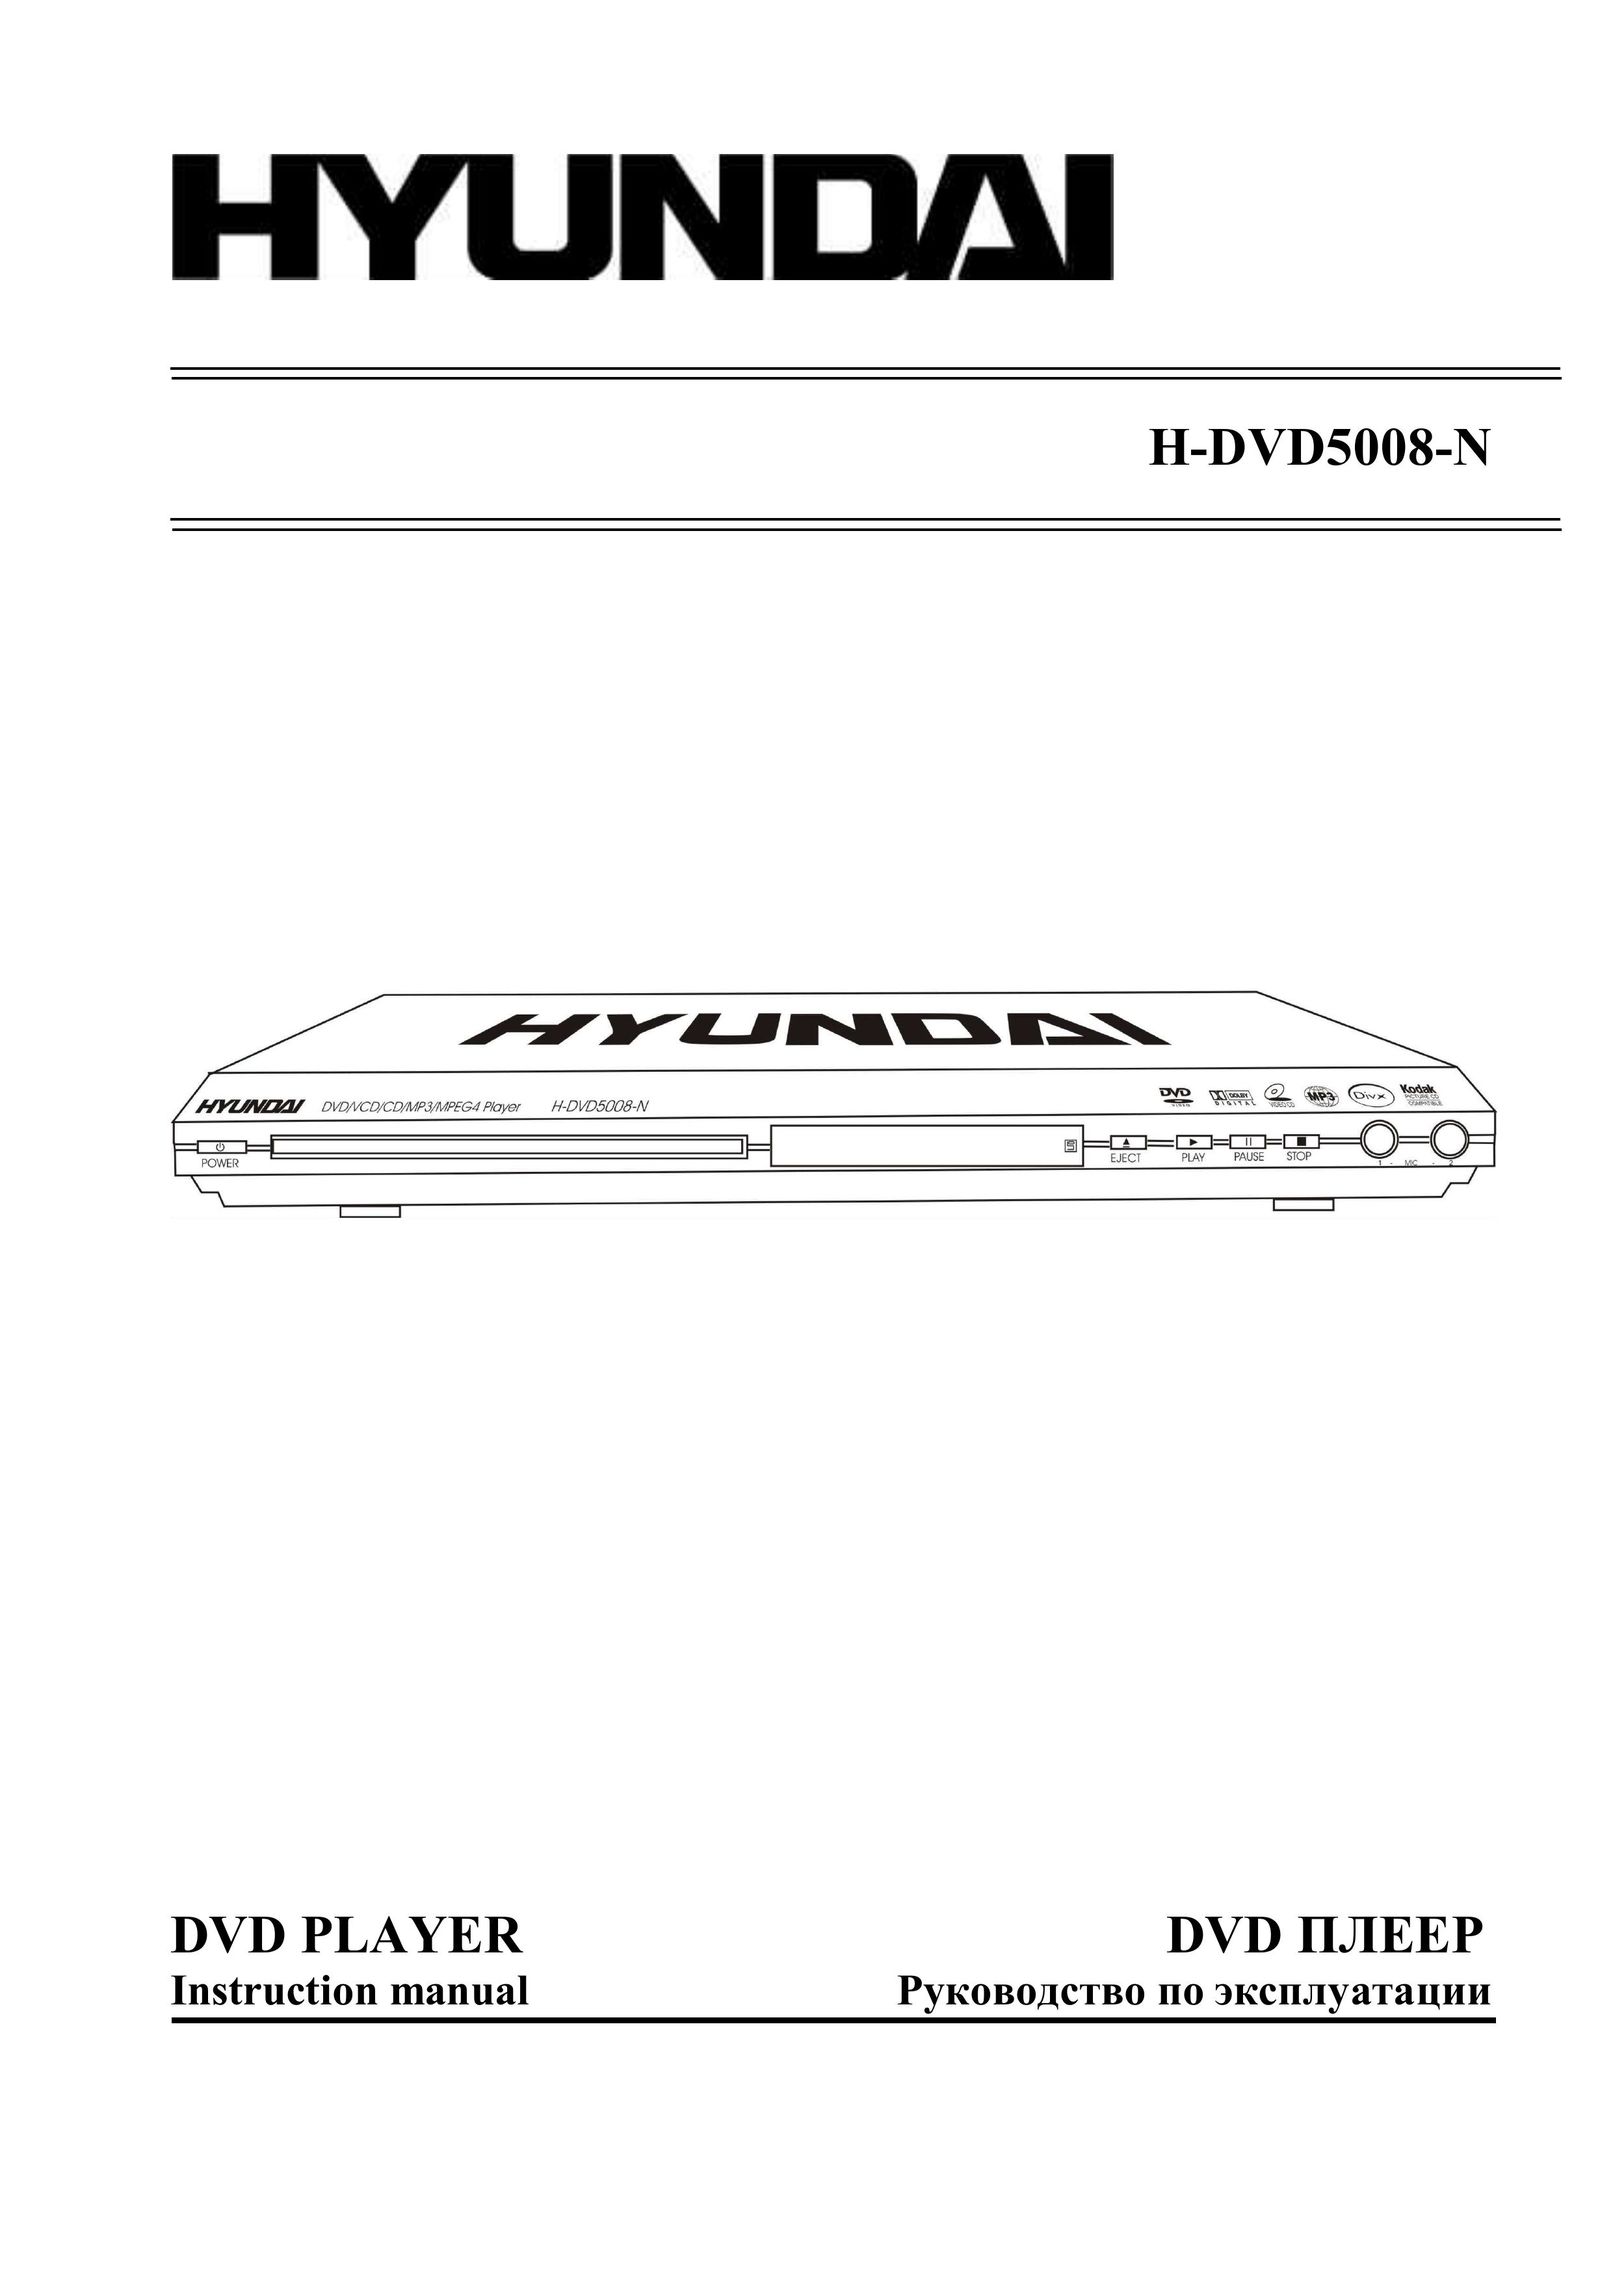 Hyundai H-DVD5008-N DVD Player User Manual